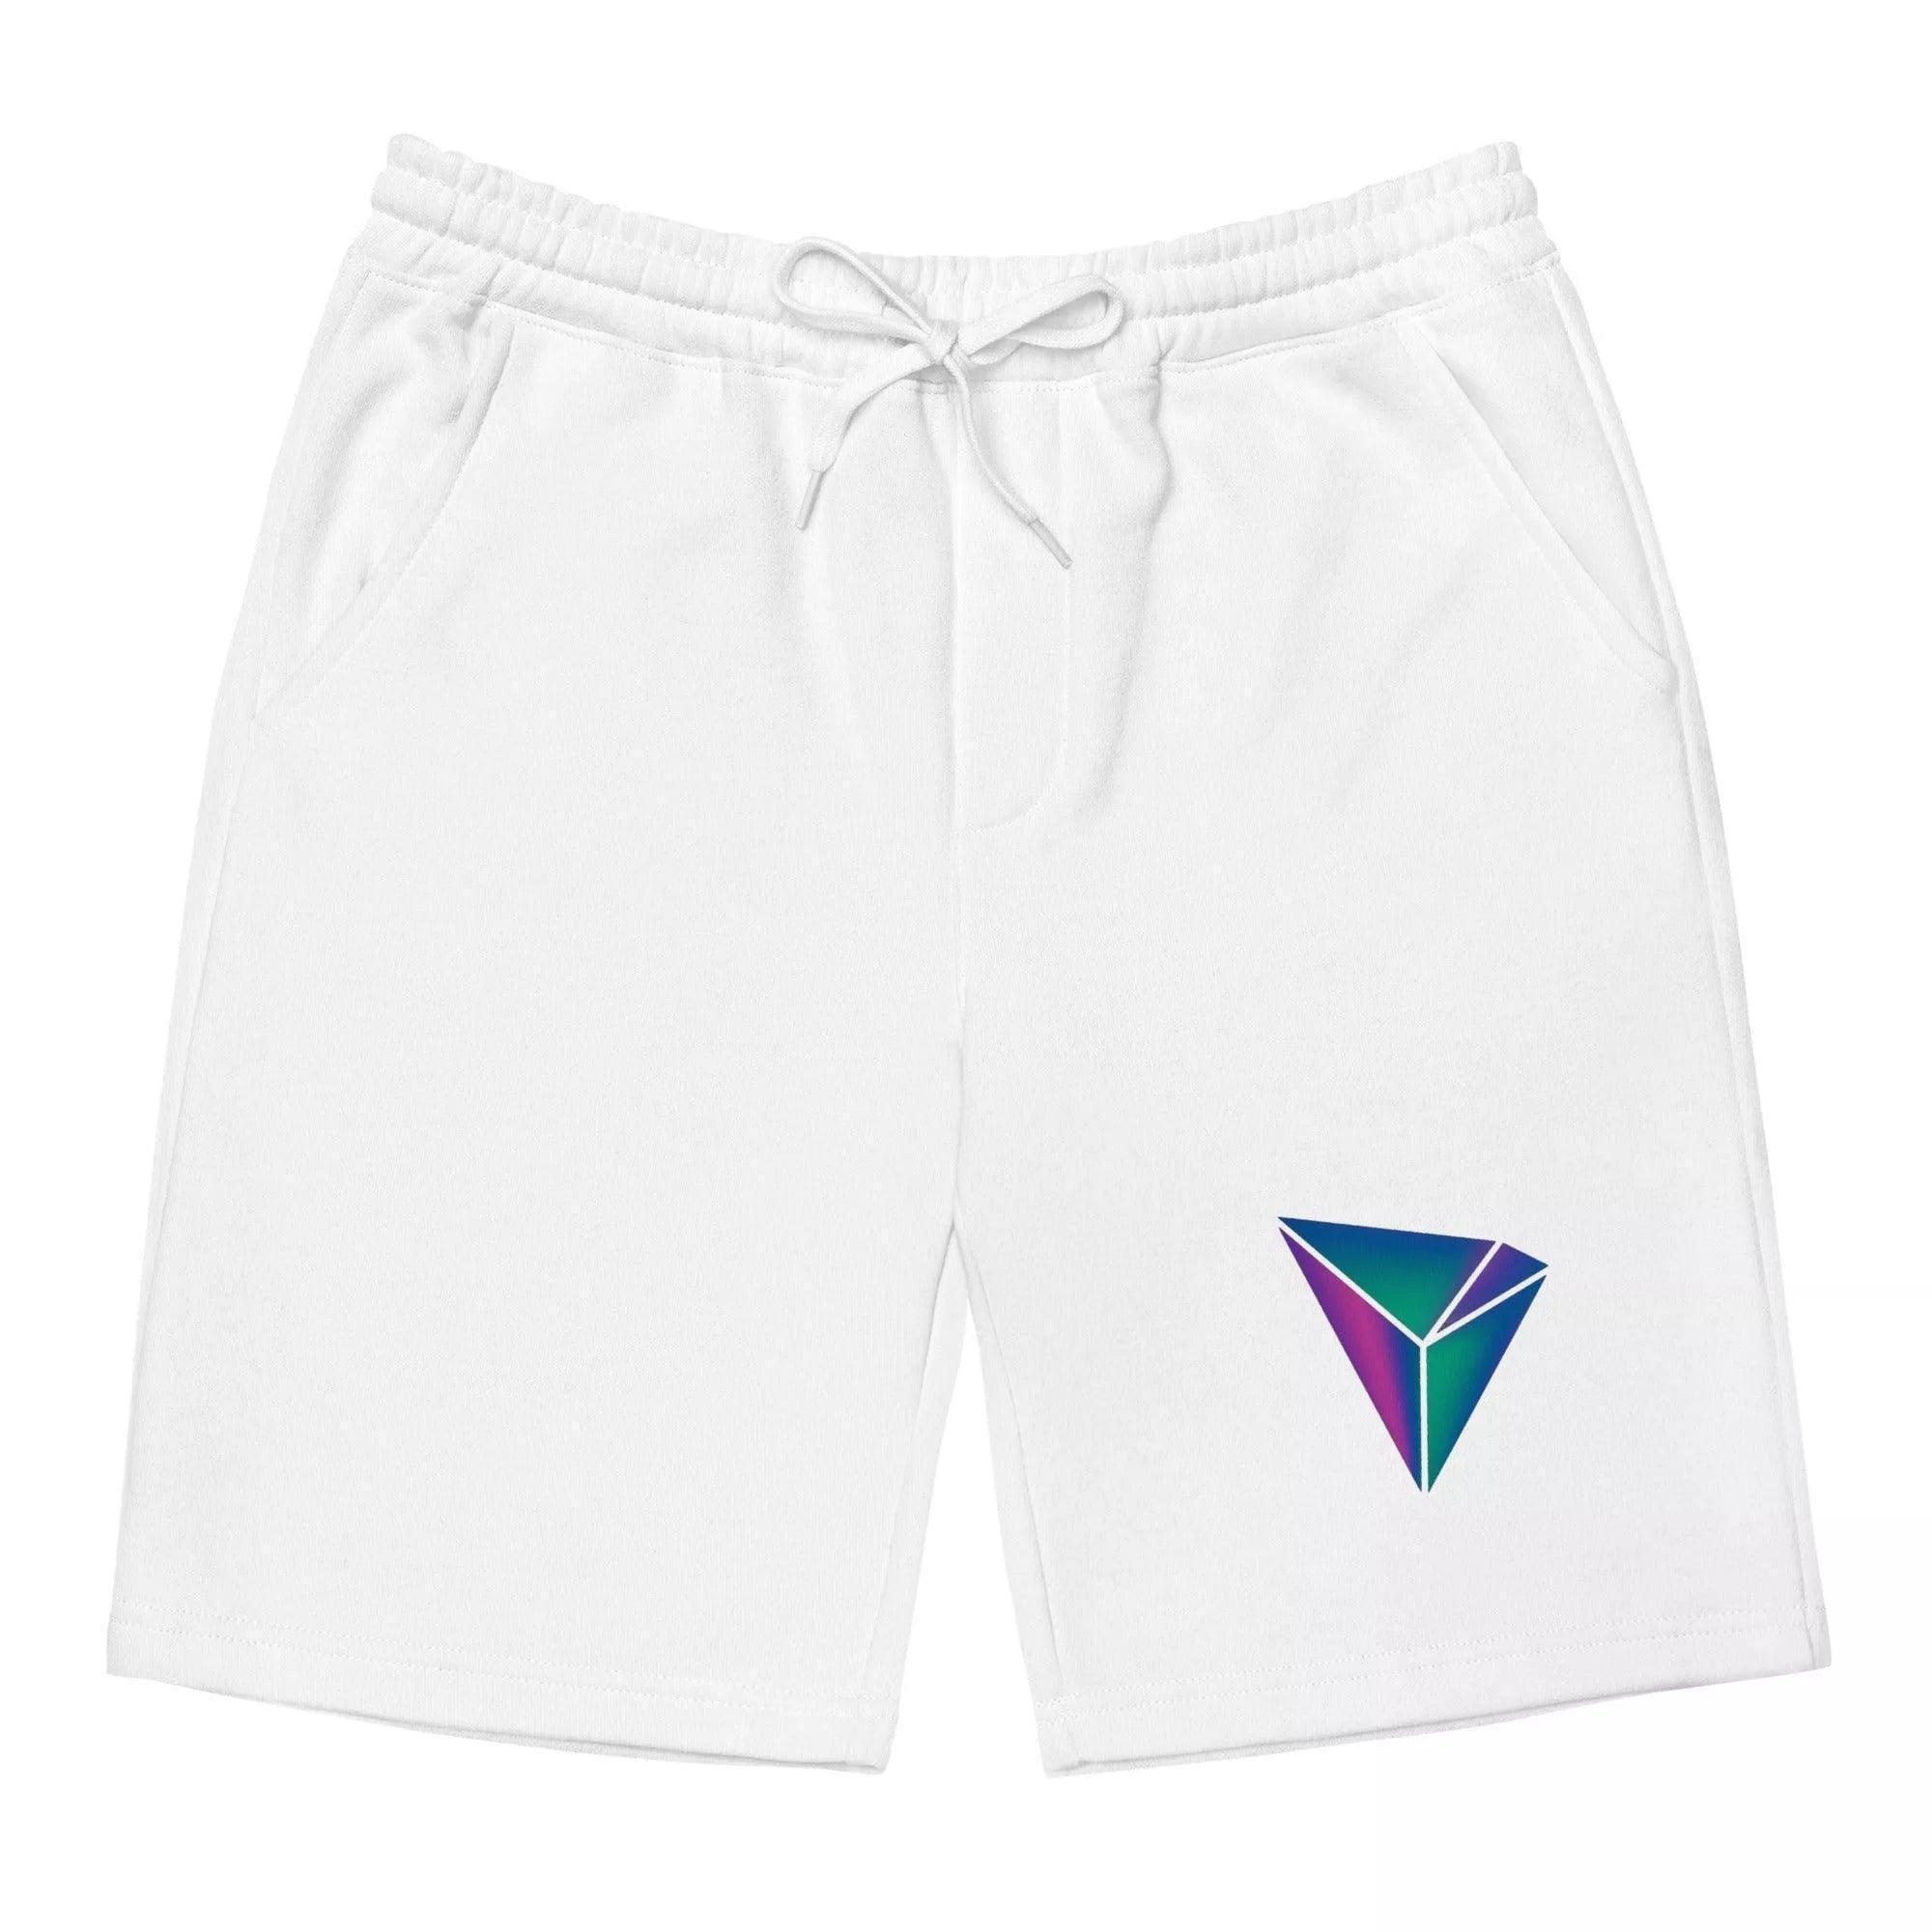 Tron Emblem Shorts - InvestmenTees